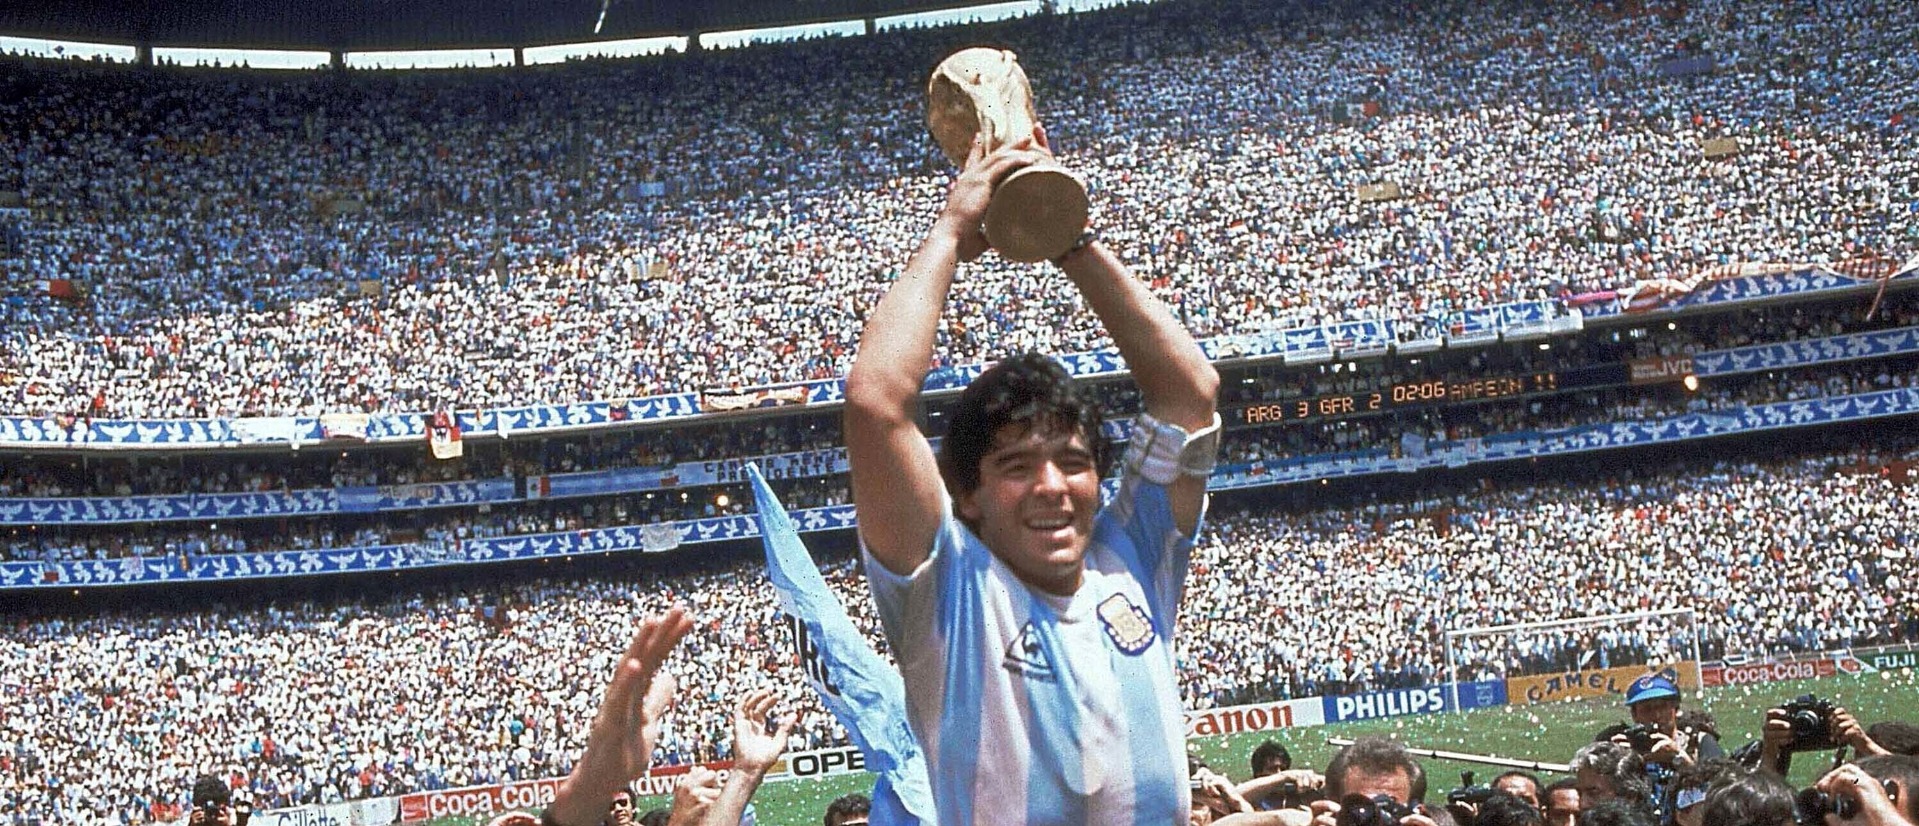 Maradona kalbi olmadan gömüldü 